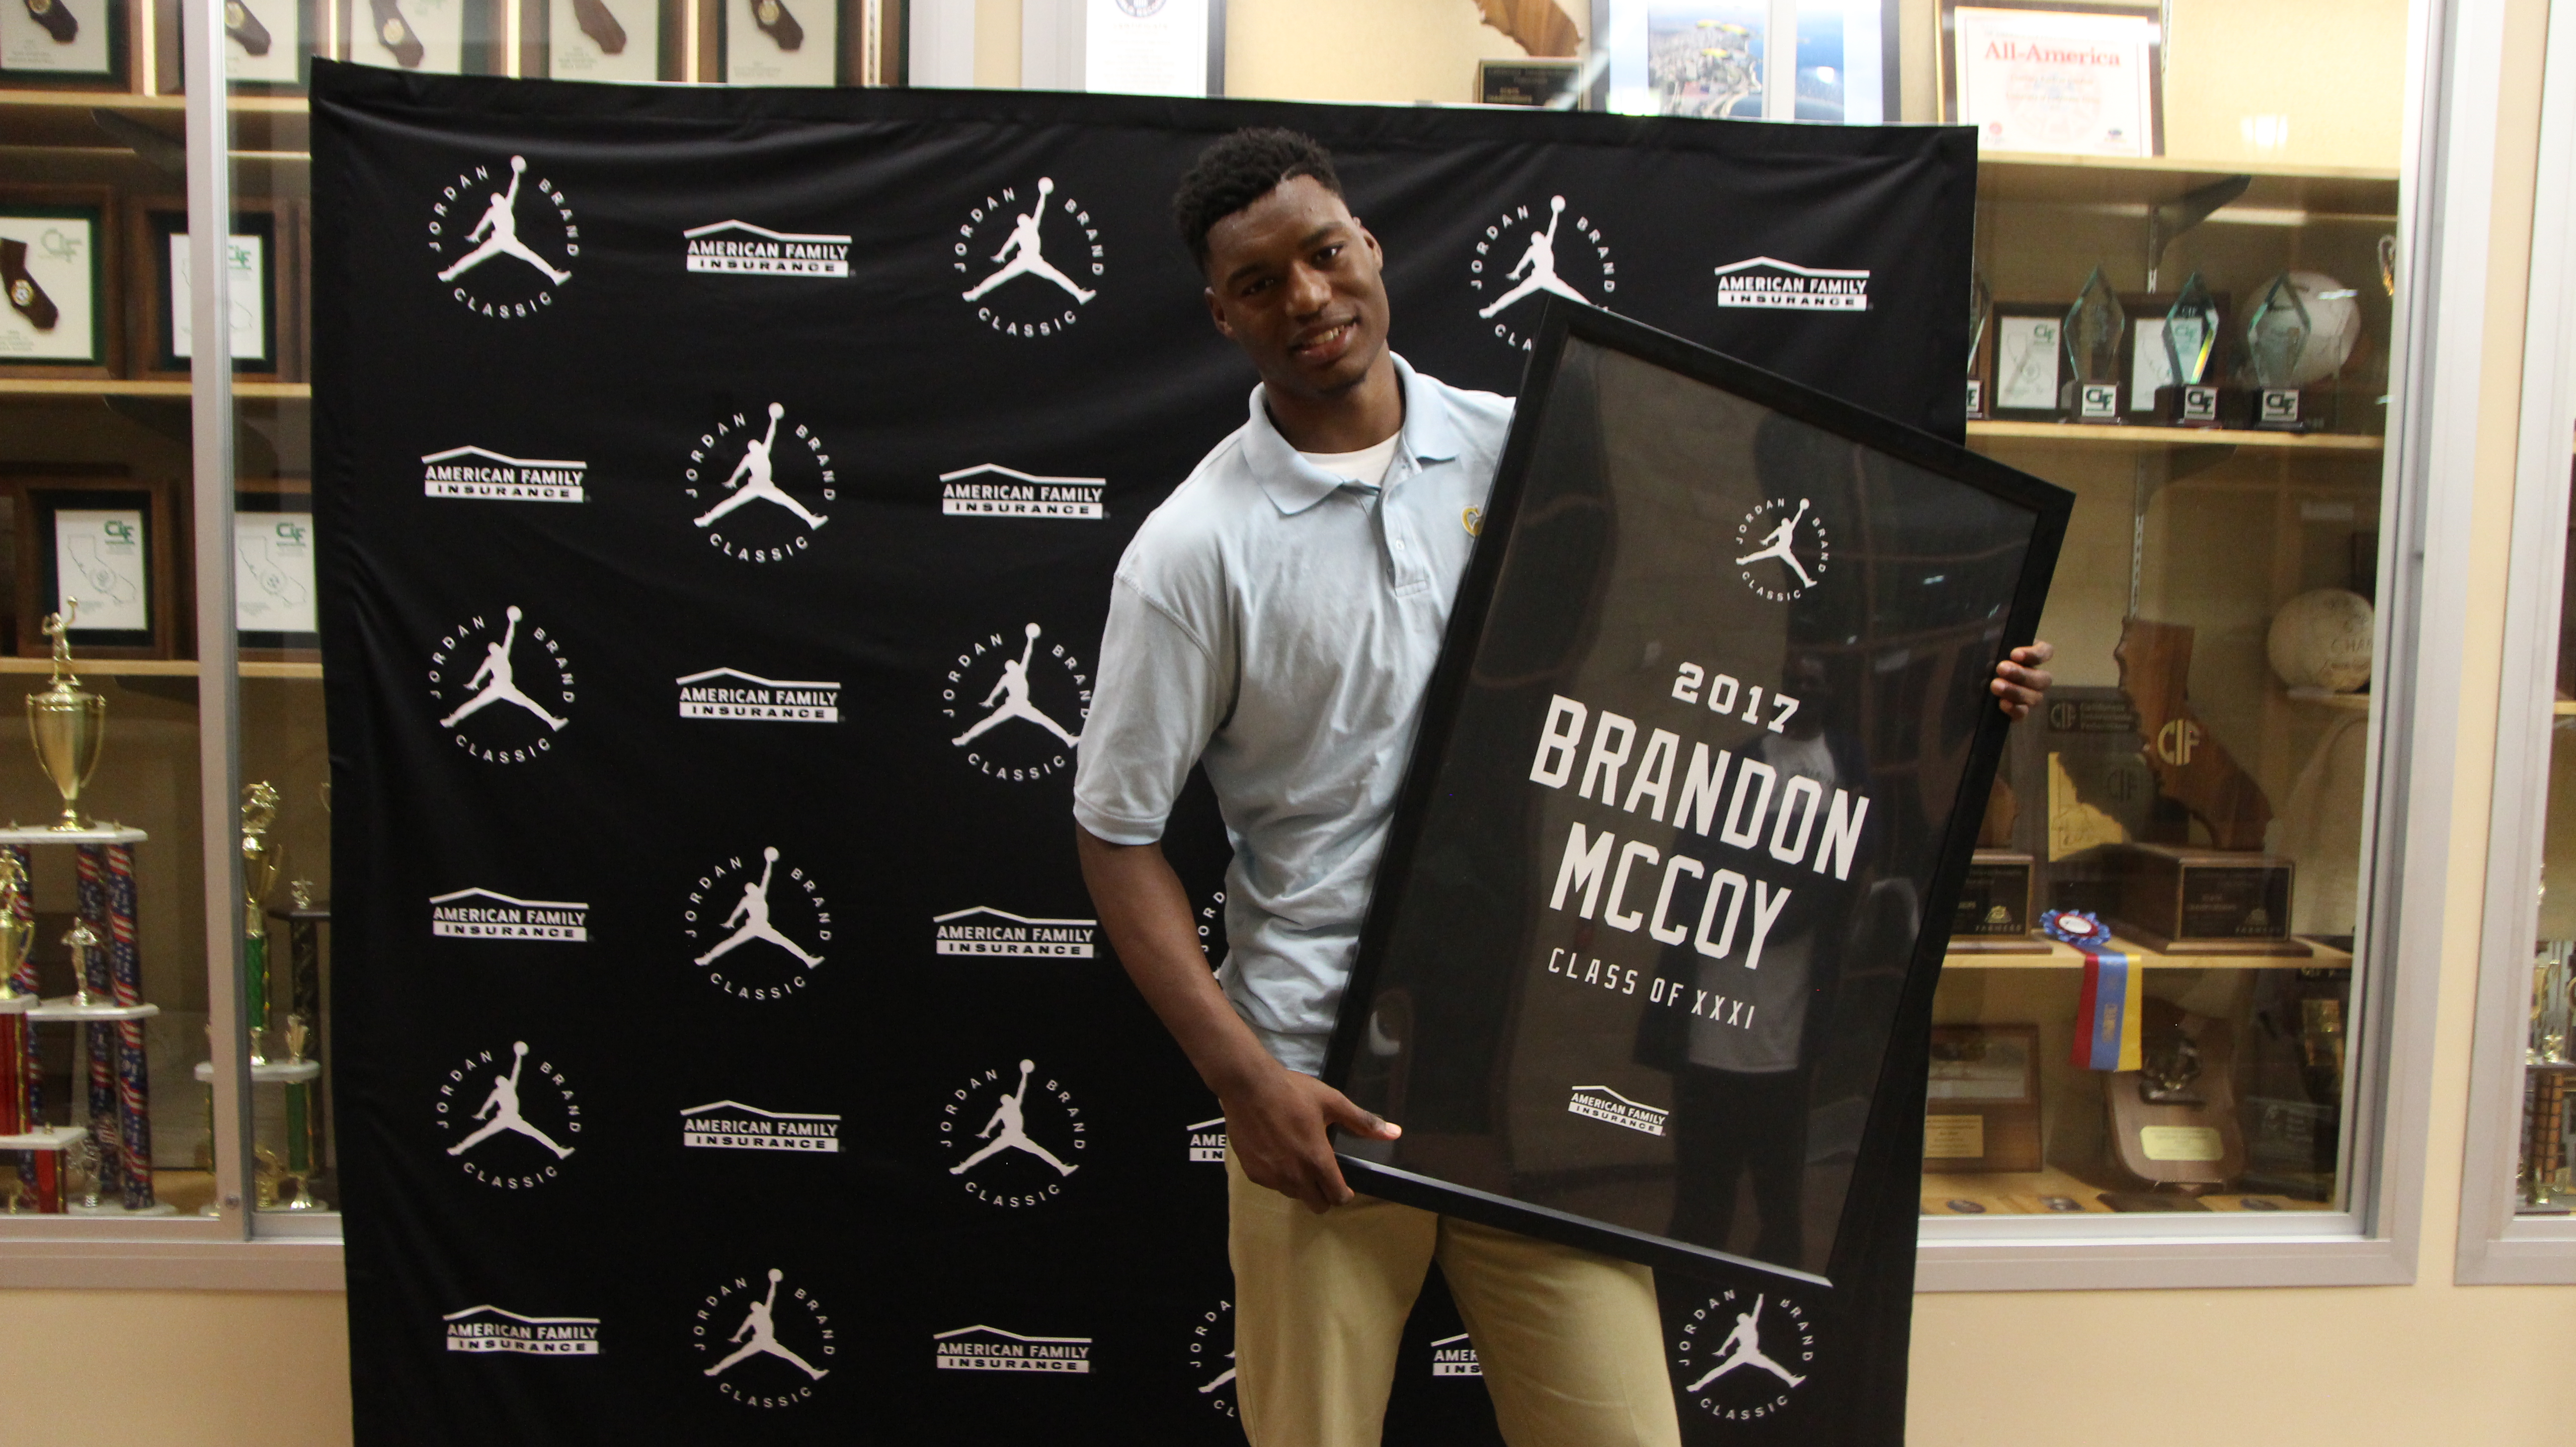 Brandon McCoy received Jordan Brand Classic jersey. (Photo: Position Sports)